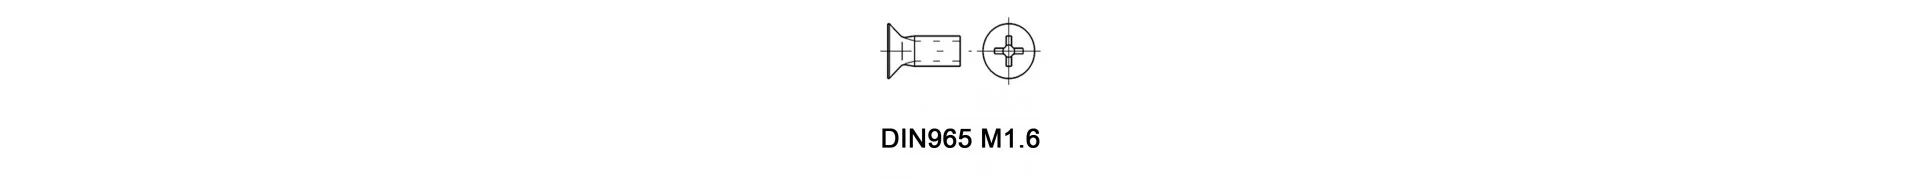 DIN965 M1.6